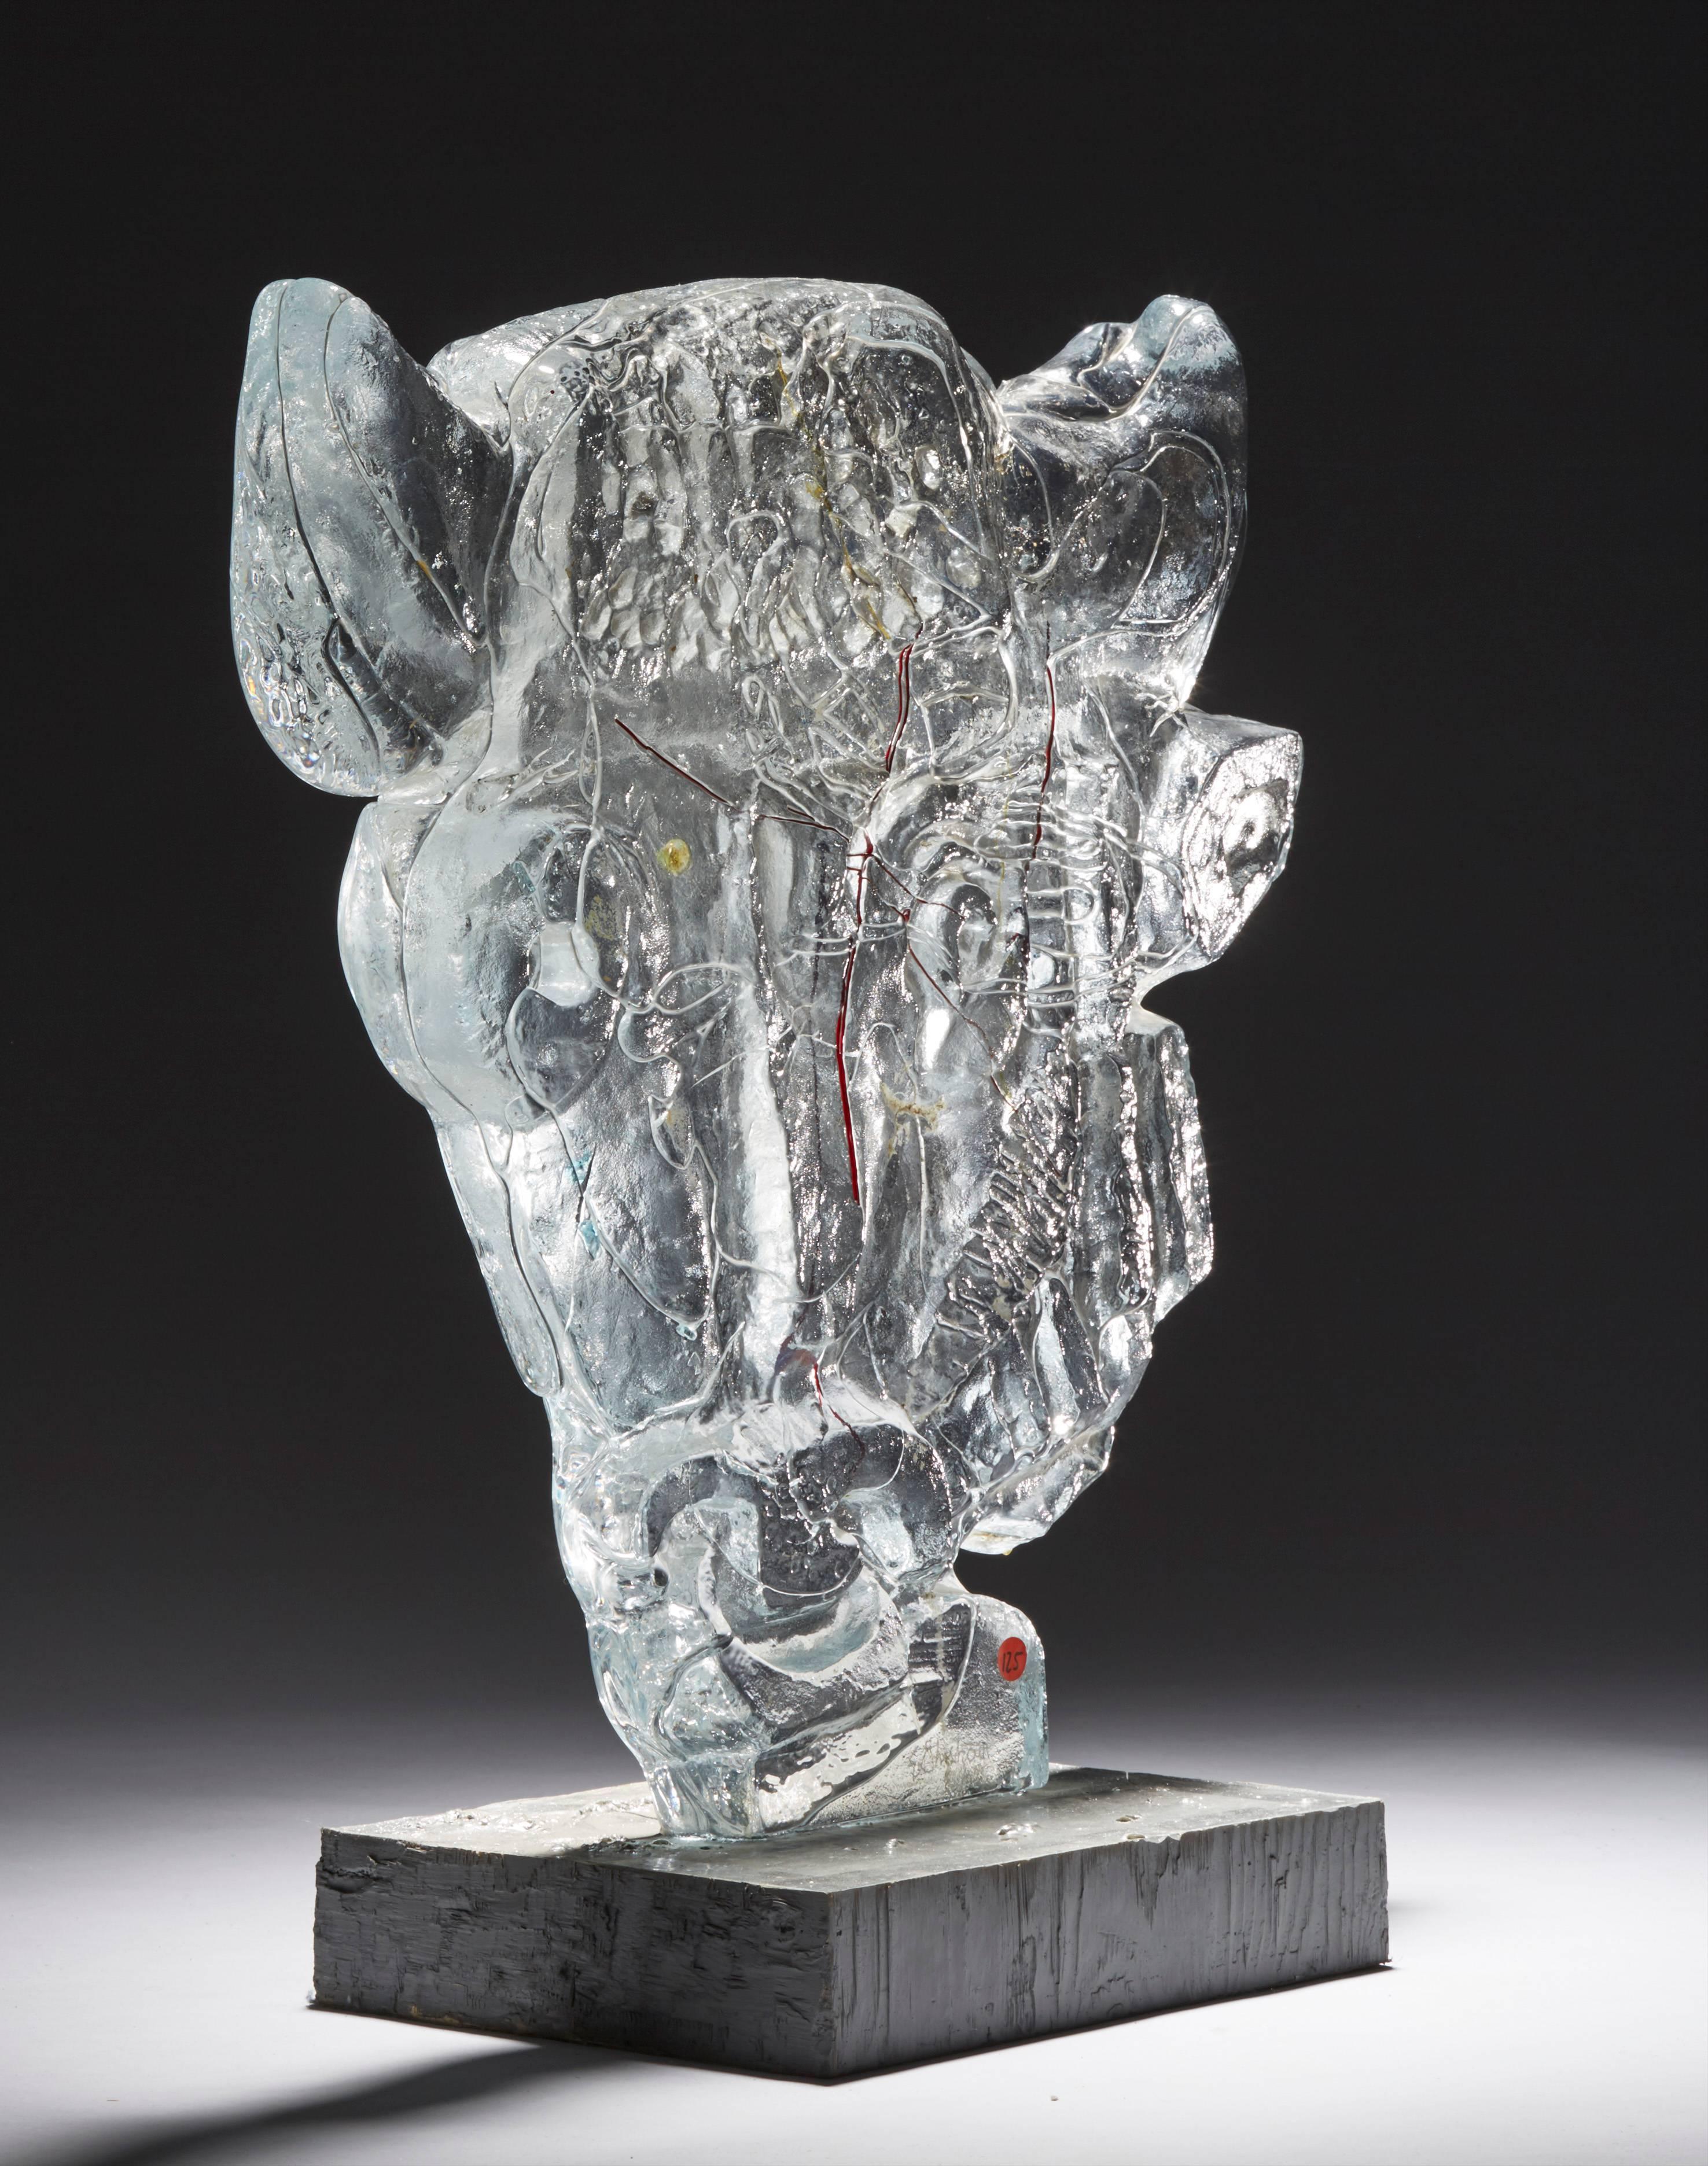 Large glass sculpture “Bull head”, design by Edvin Öhrström for Lindshammar Glasswork, 1960s.
Signed E Öhrström. The sculpture has belonged to Edvin Öhrström’s private collection.
Measures: H: 73cm/28,7? including base, With 29cm/11.4